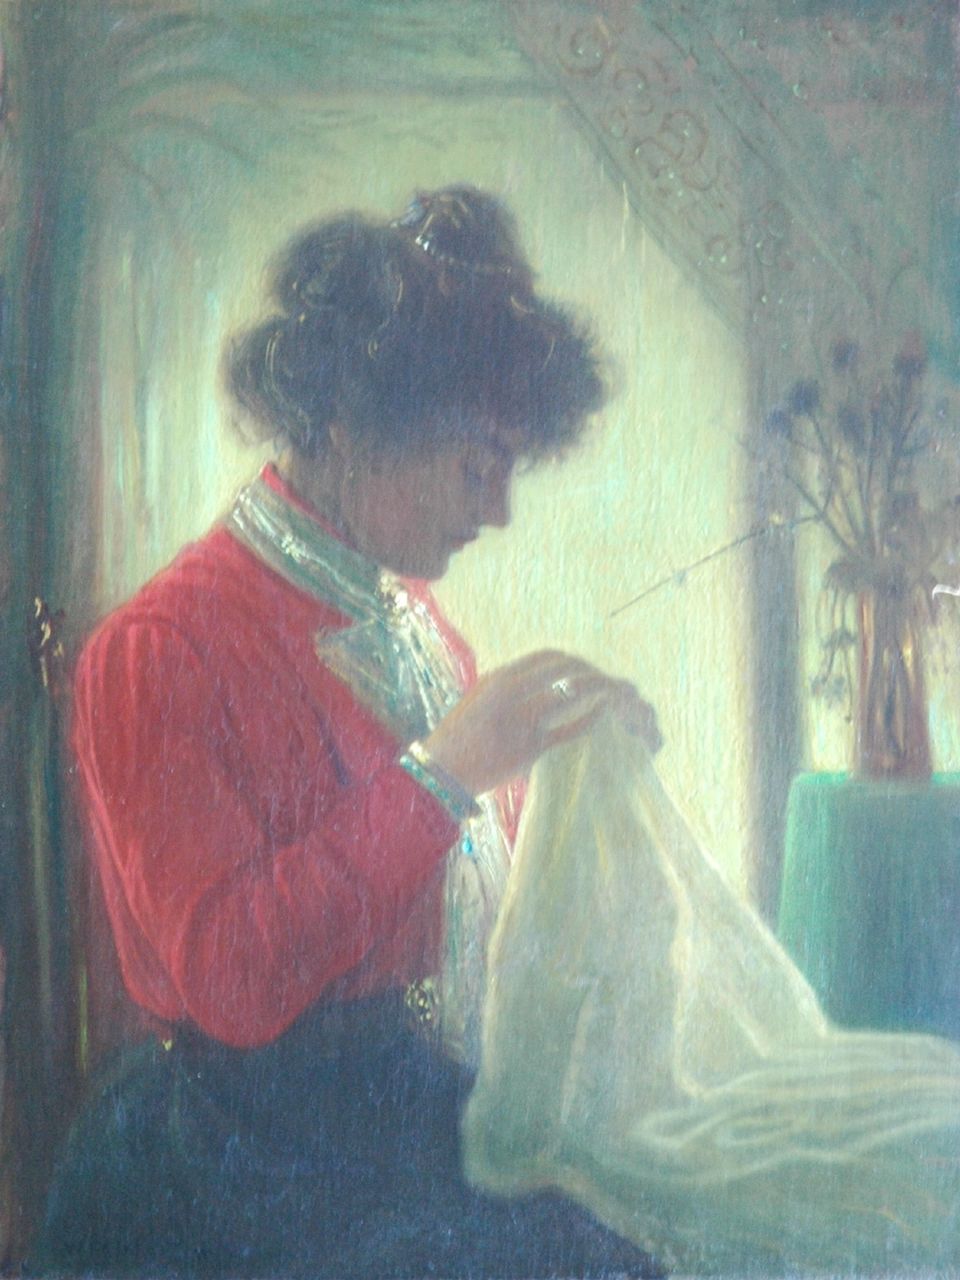 Pothast W.F.A.  | 'Willem' Frederik Alphons  Pothast, Vrouw met borduurwerk, olieverf op doek 45,0 x 34,3 cm, gesigneerd linksonder